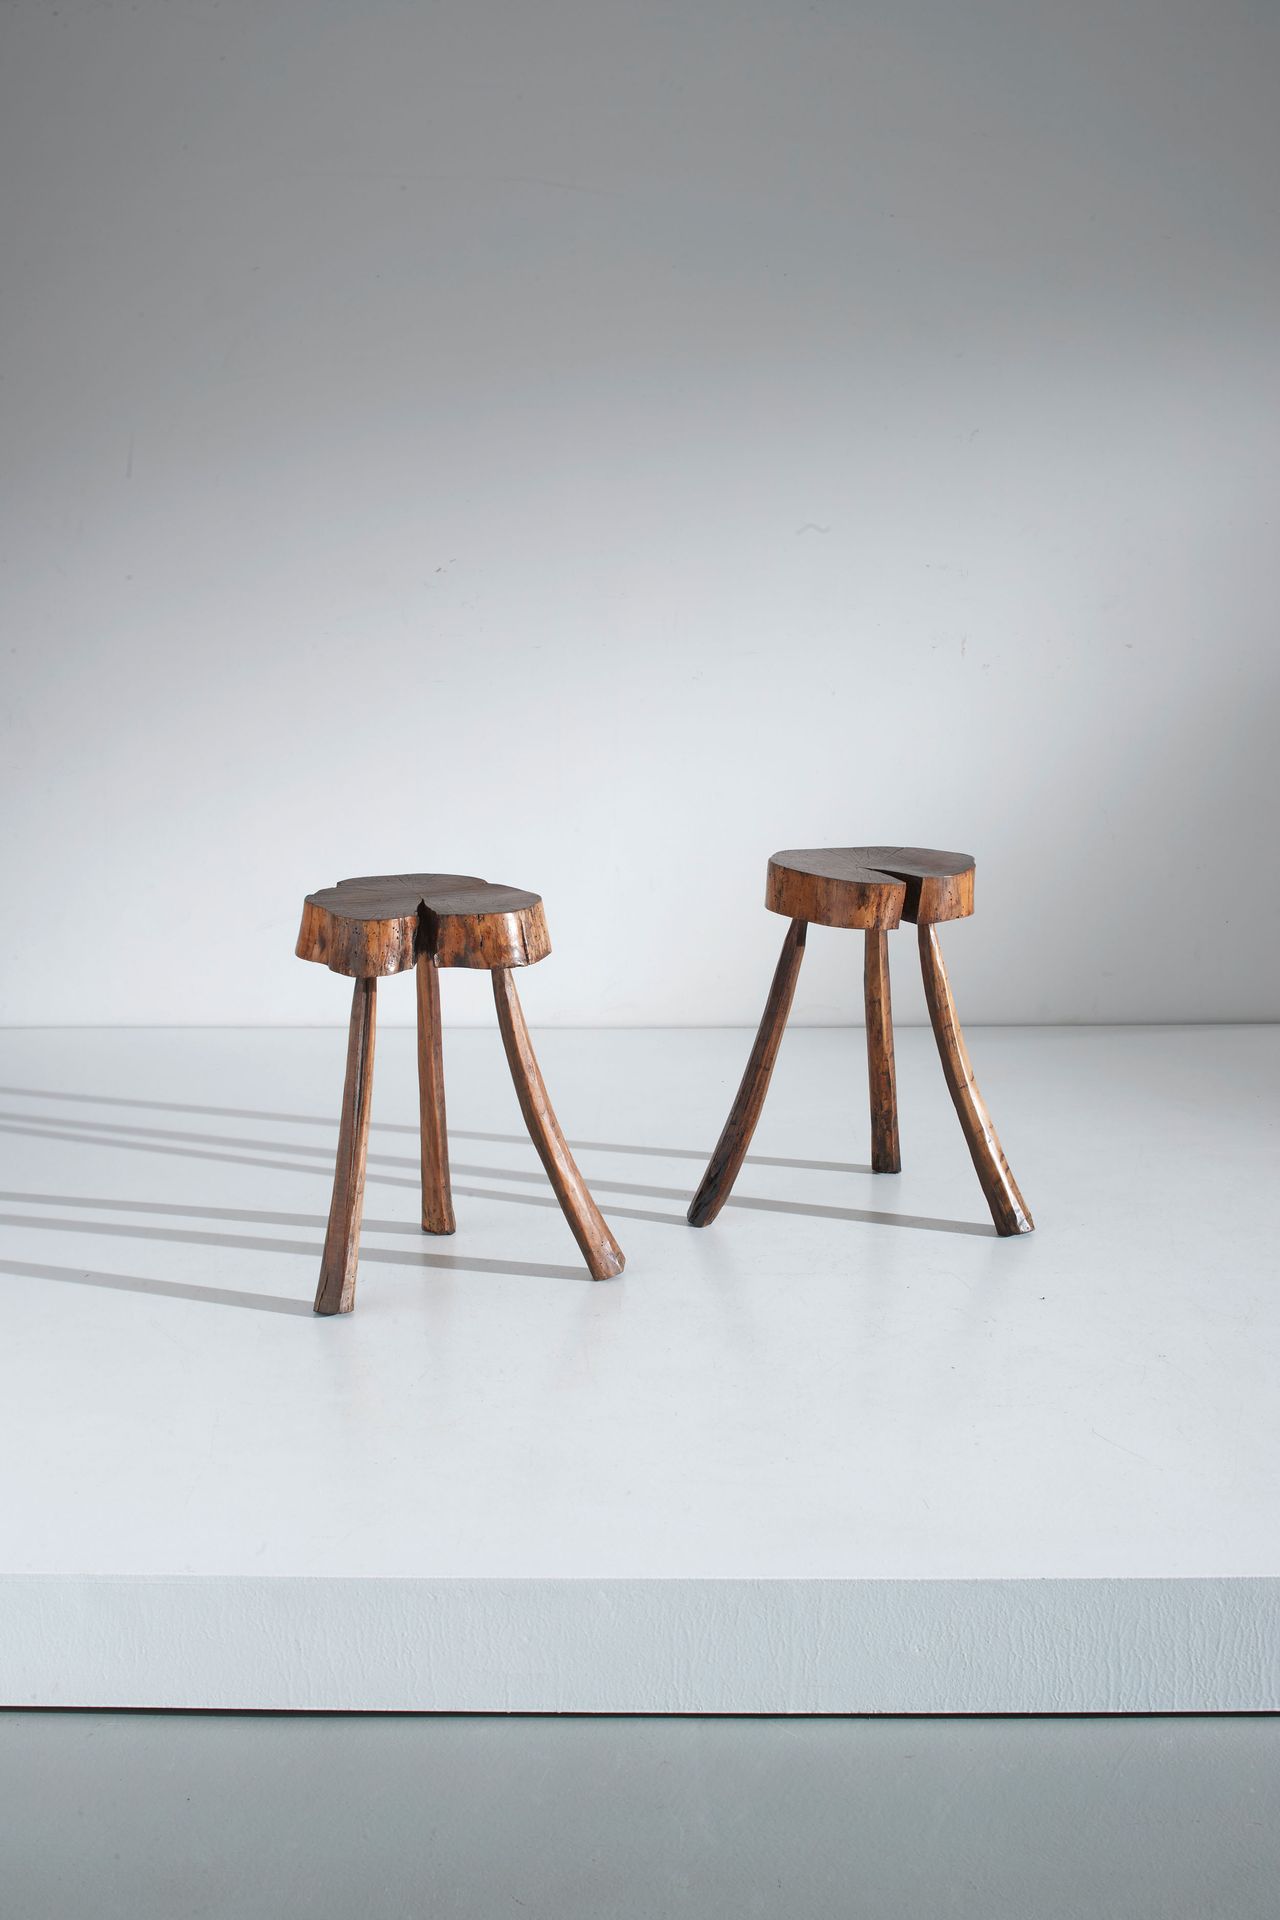 Manifattura Italiana 两张凳子。榉木。意大利1960年代。
cm 53x40x40 approx.
一对意大利凳子



状态良好。磨损的迹&hellip;